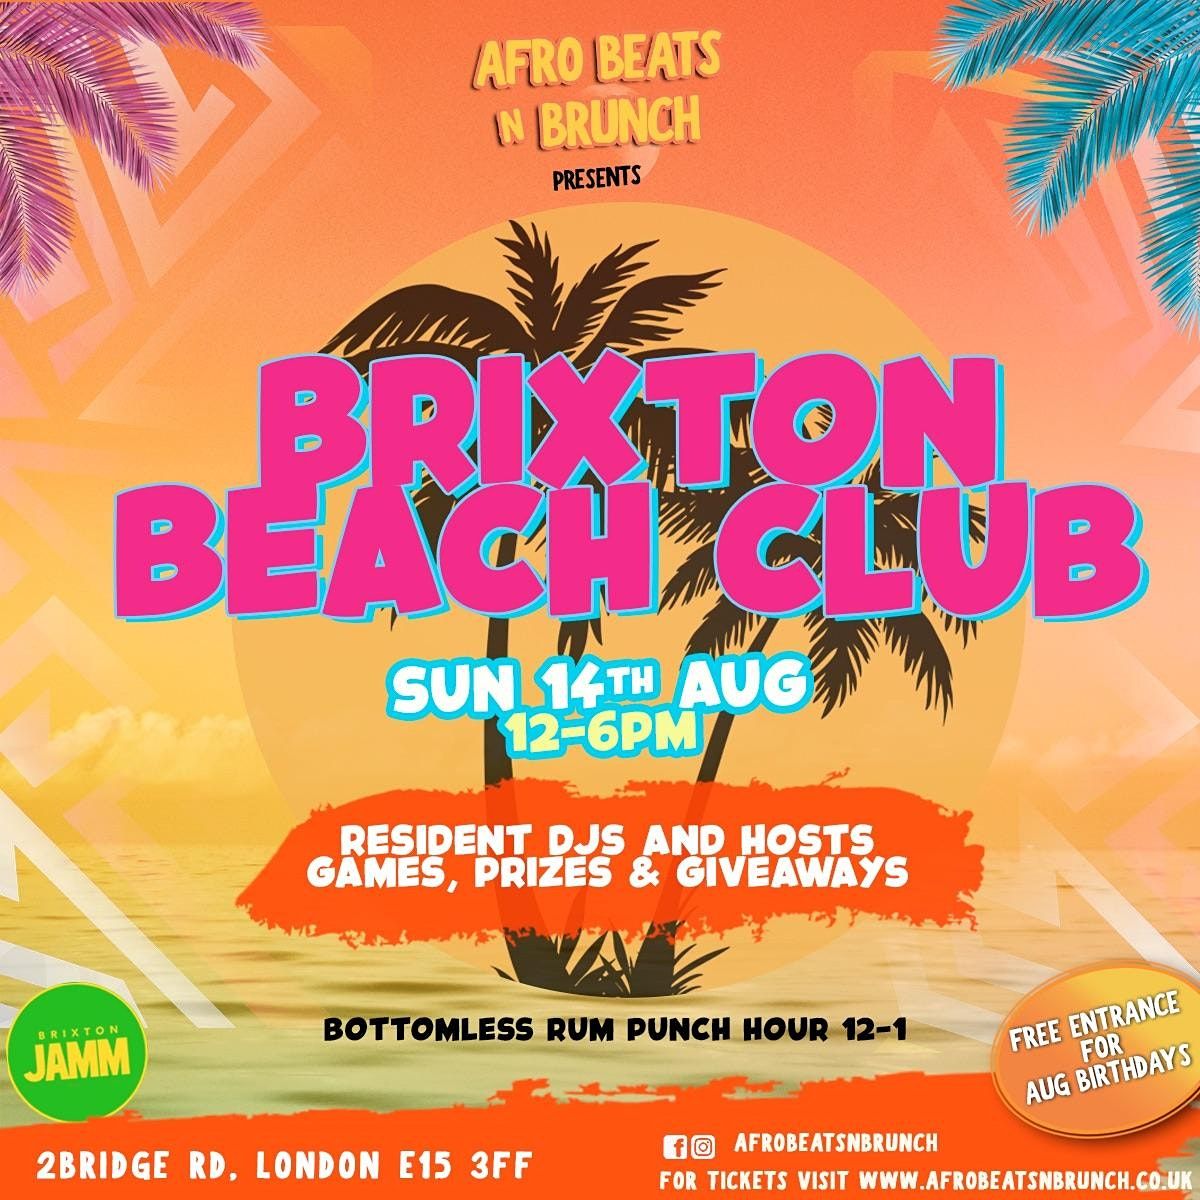 Afrobeats N Brunch: Brixton Beach Club - Aug 14th